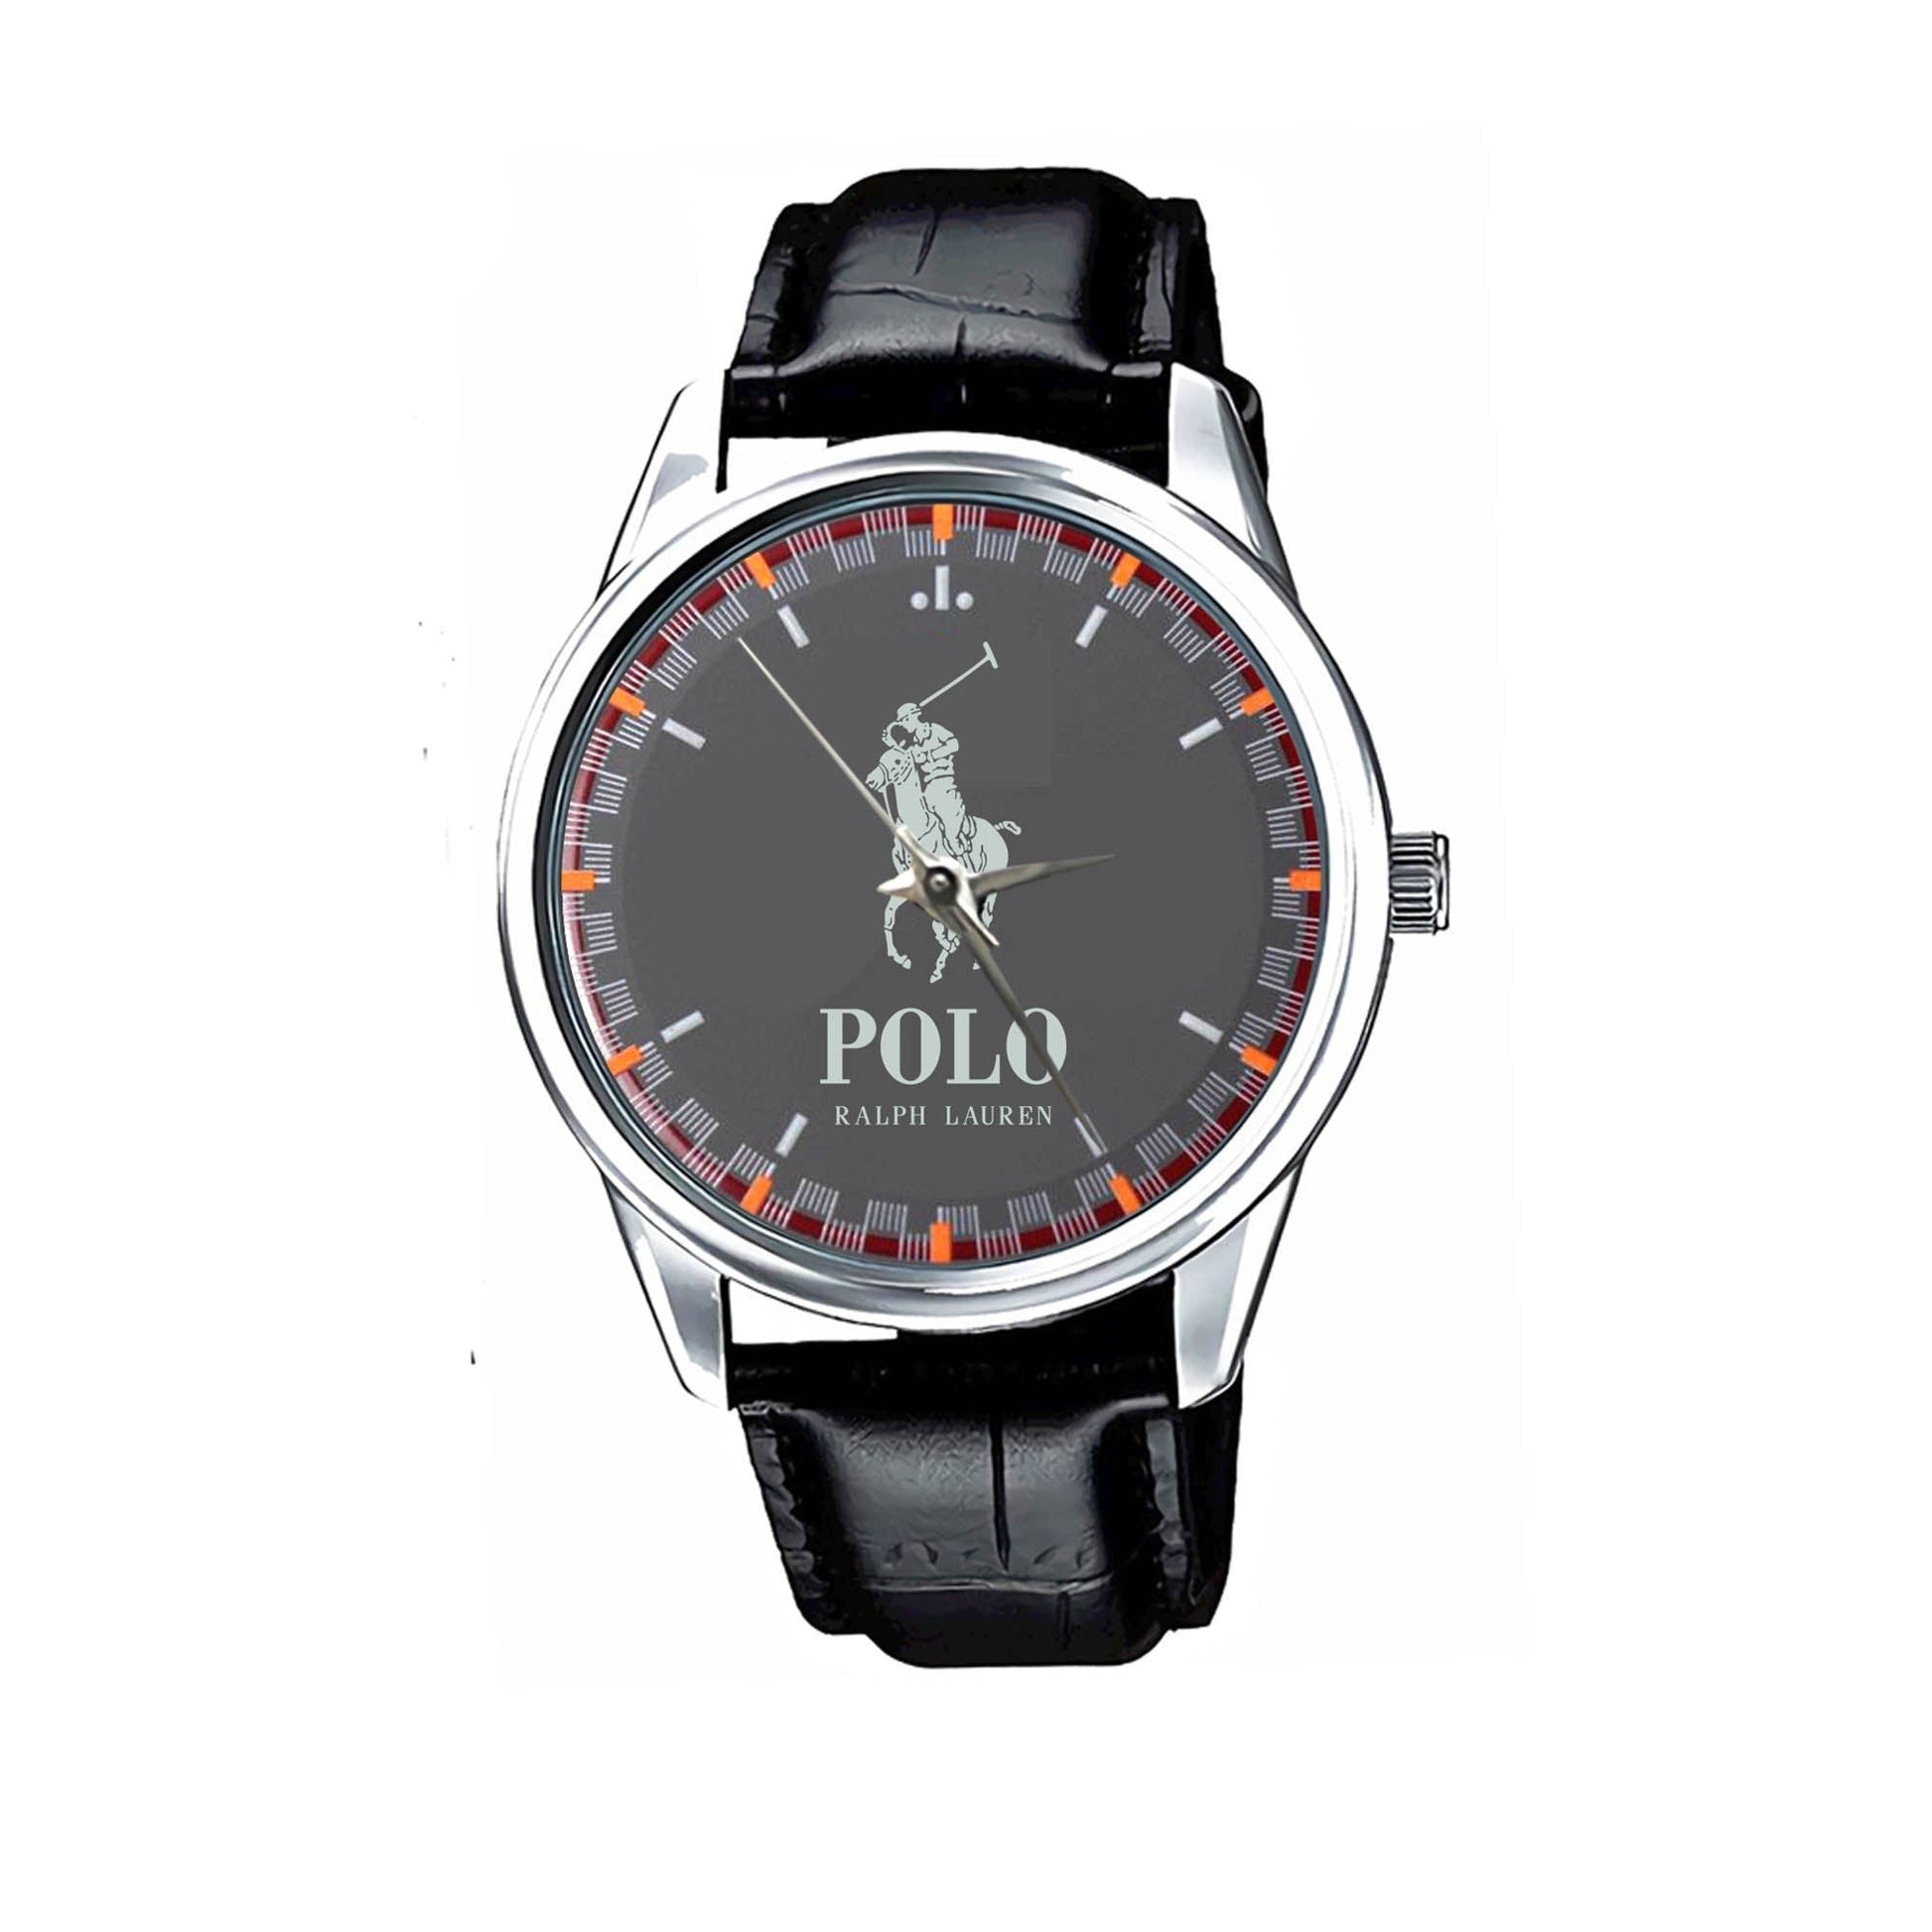 Polo Ralph Lauren Watches KP340